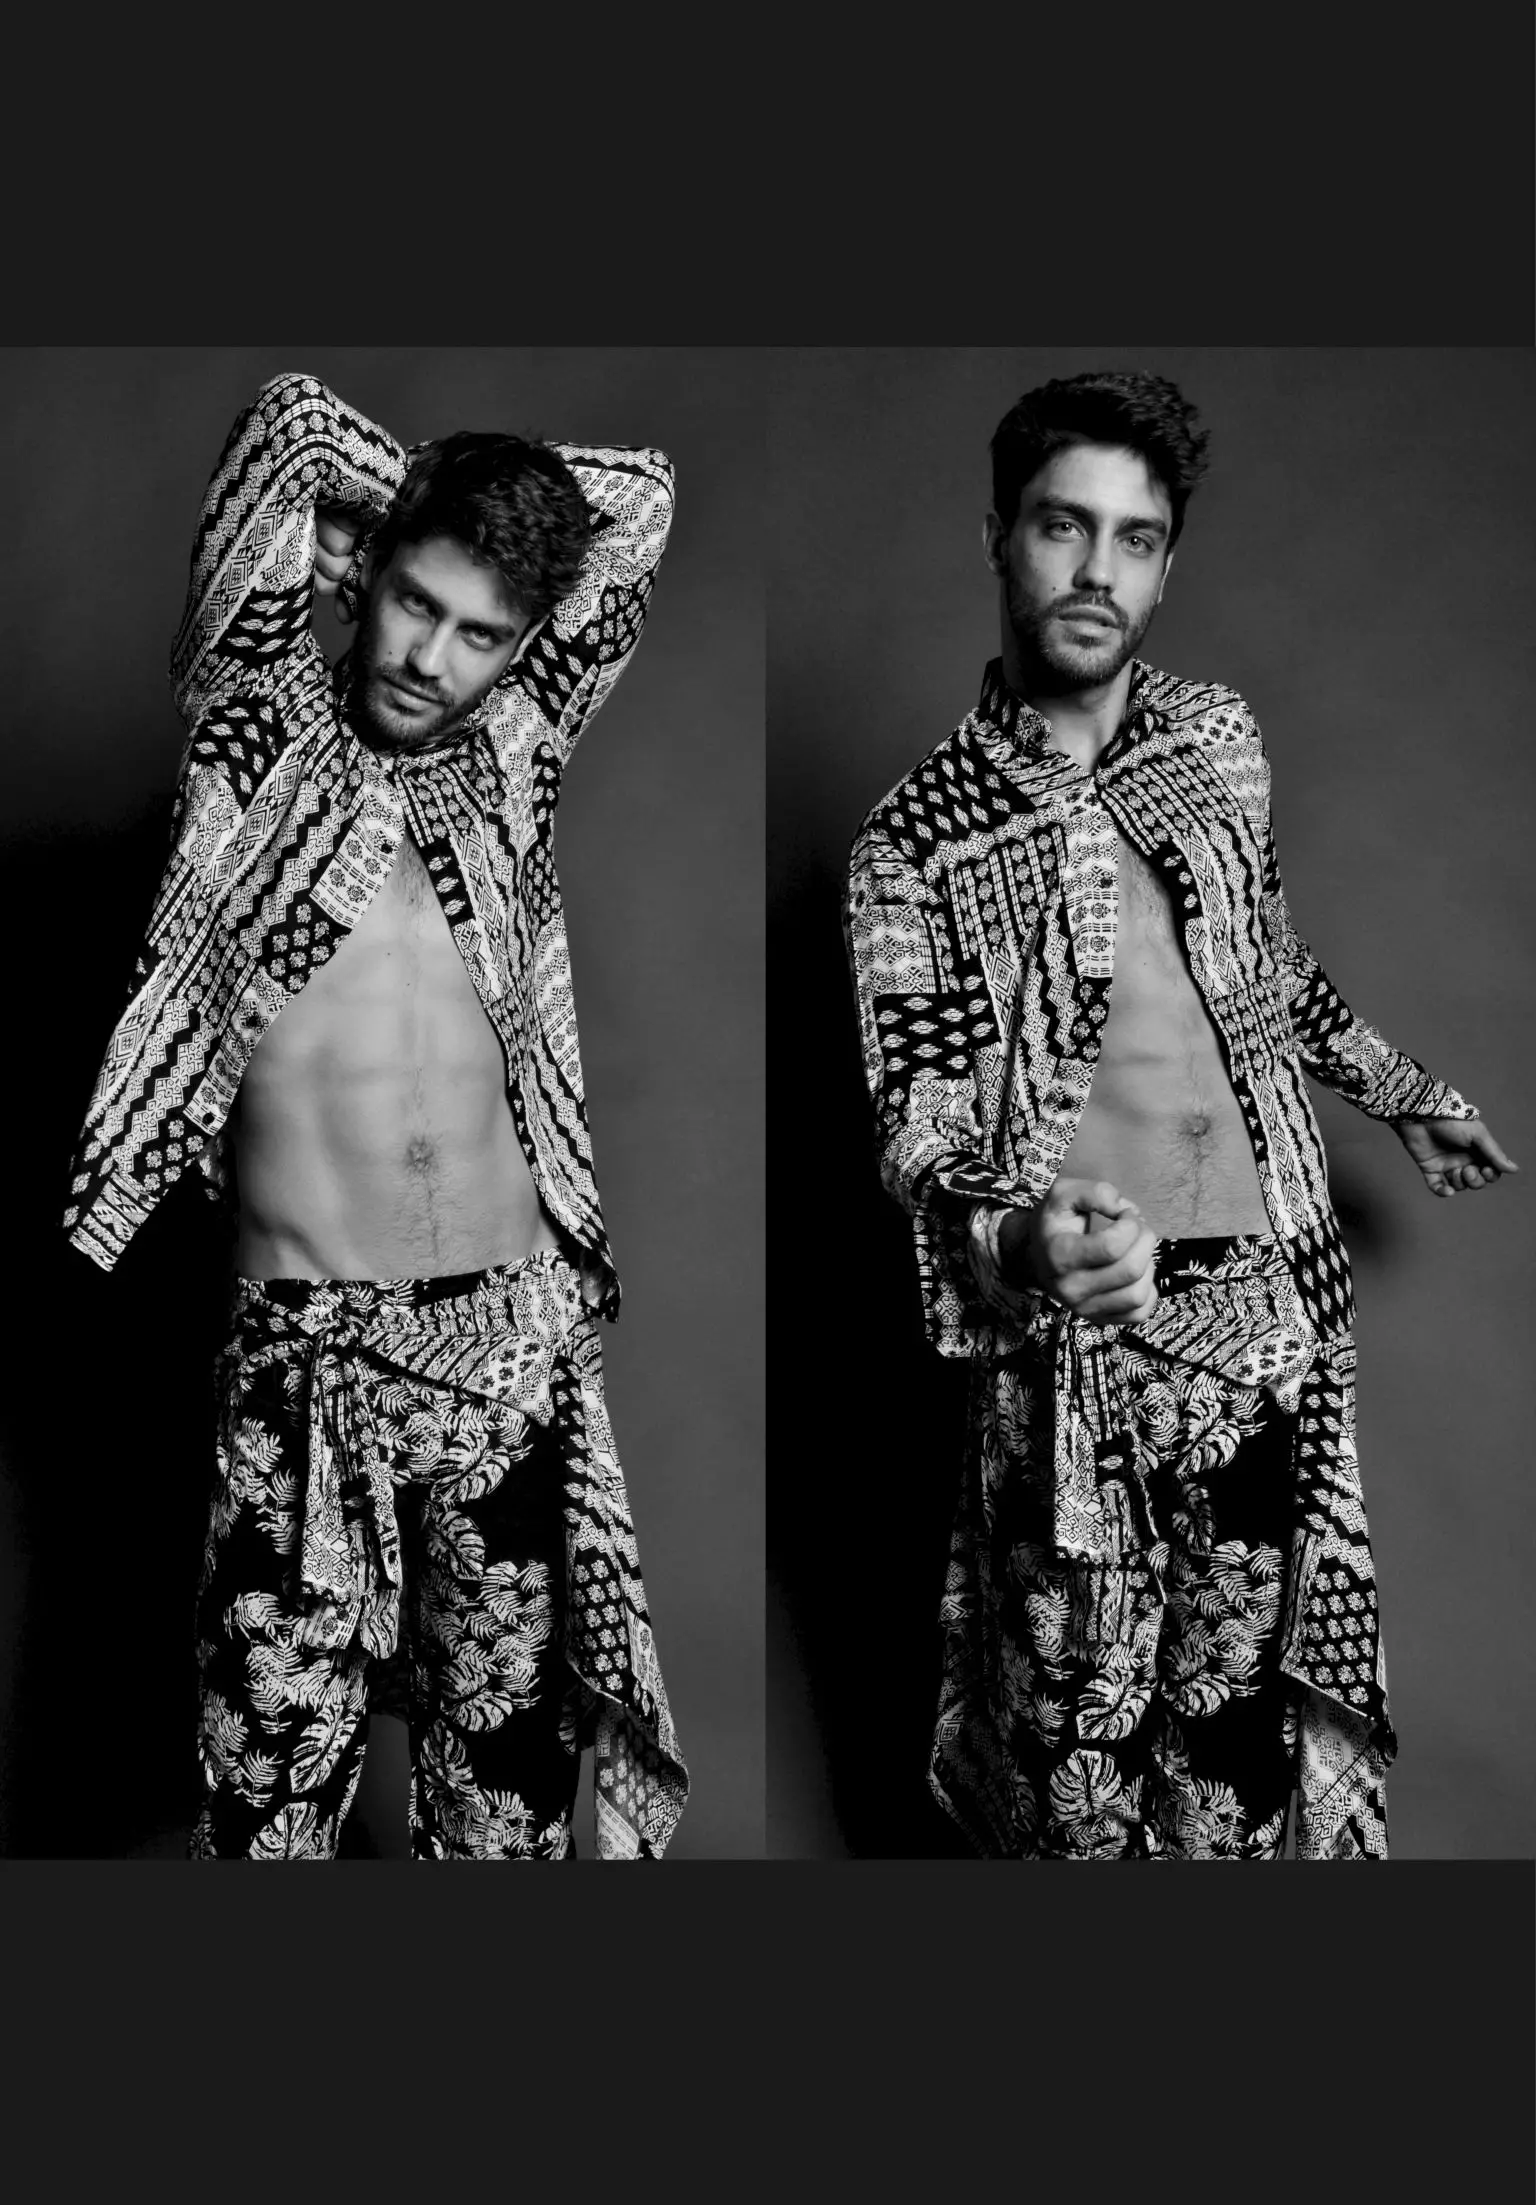 Ator e modelo Juan Guilera na EP Bookers posa para ensaio exclusivo para Reflex Homme, edição de abril de 2015 capturada por Ari Mendes com looks totais de Mahatma D.